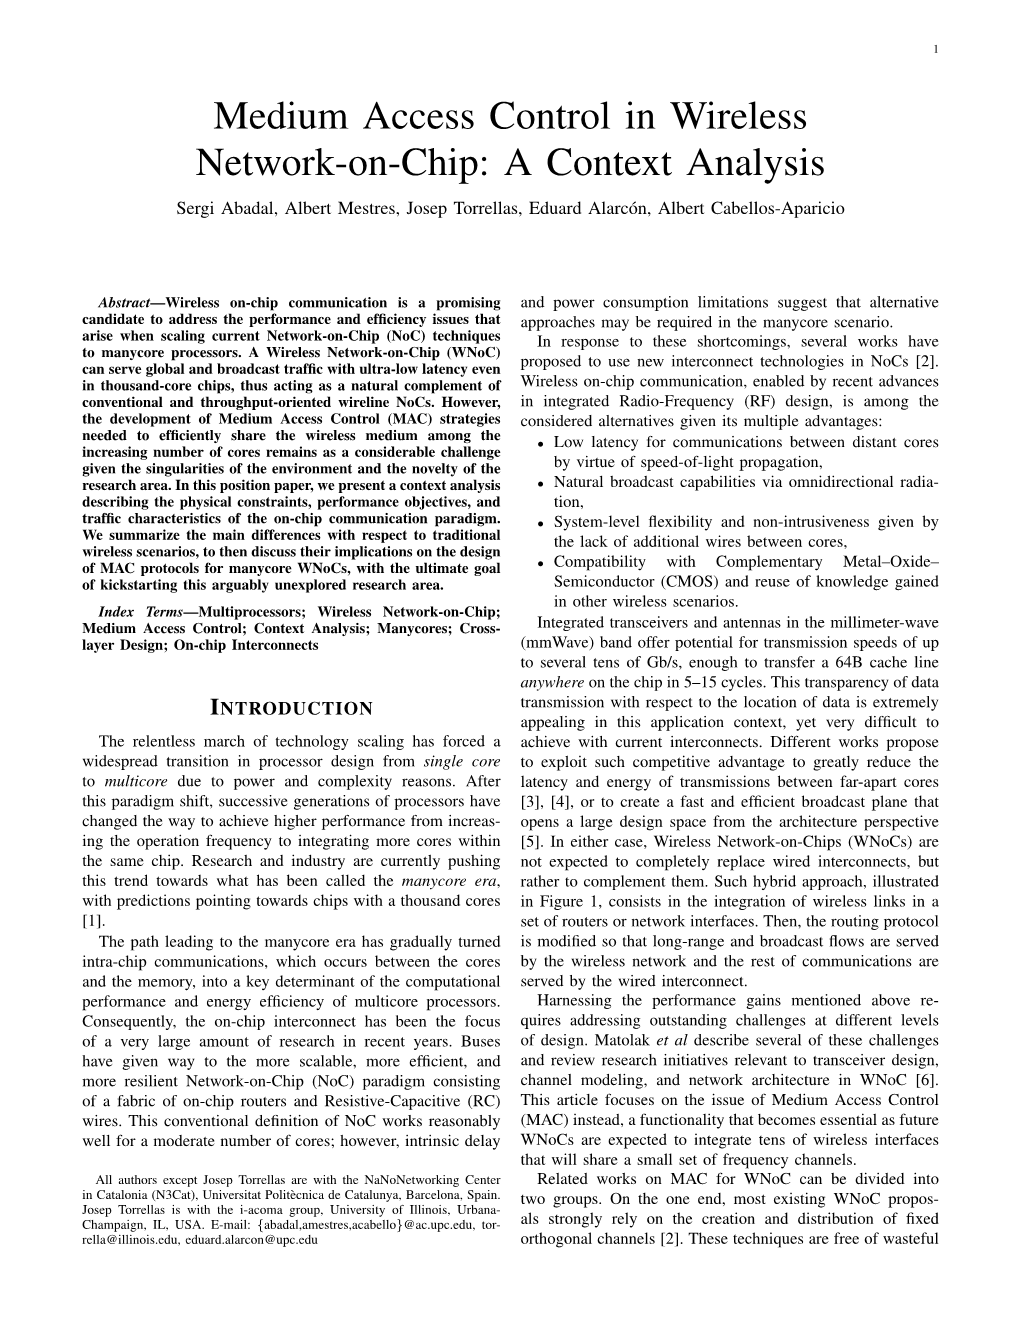 Medium Access Control in Wireless Network-On-Chip: a Context Analysis Sergi Abadal, Albert Mestres, Josep Torrellas, Eduard Alarcon,´ Albert Cabellos-Aparicio